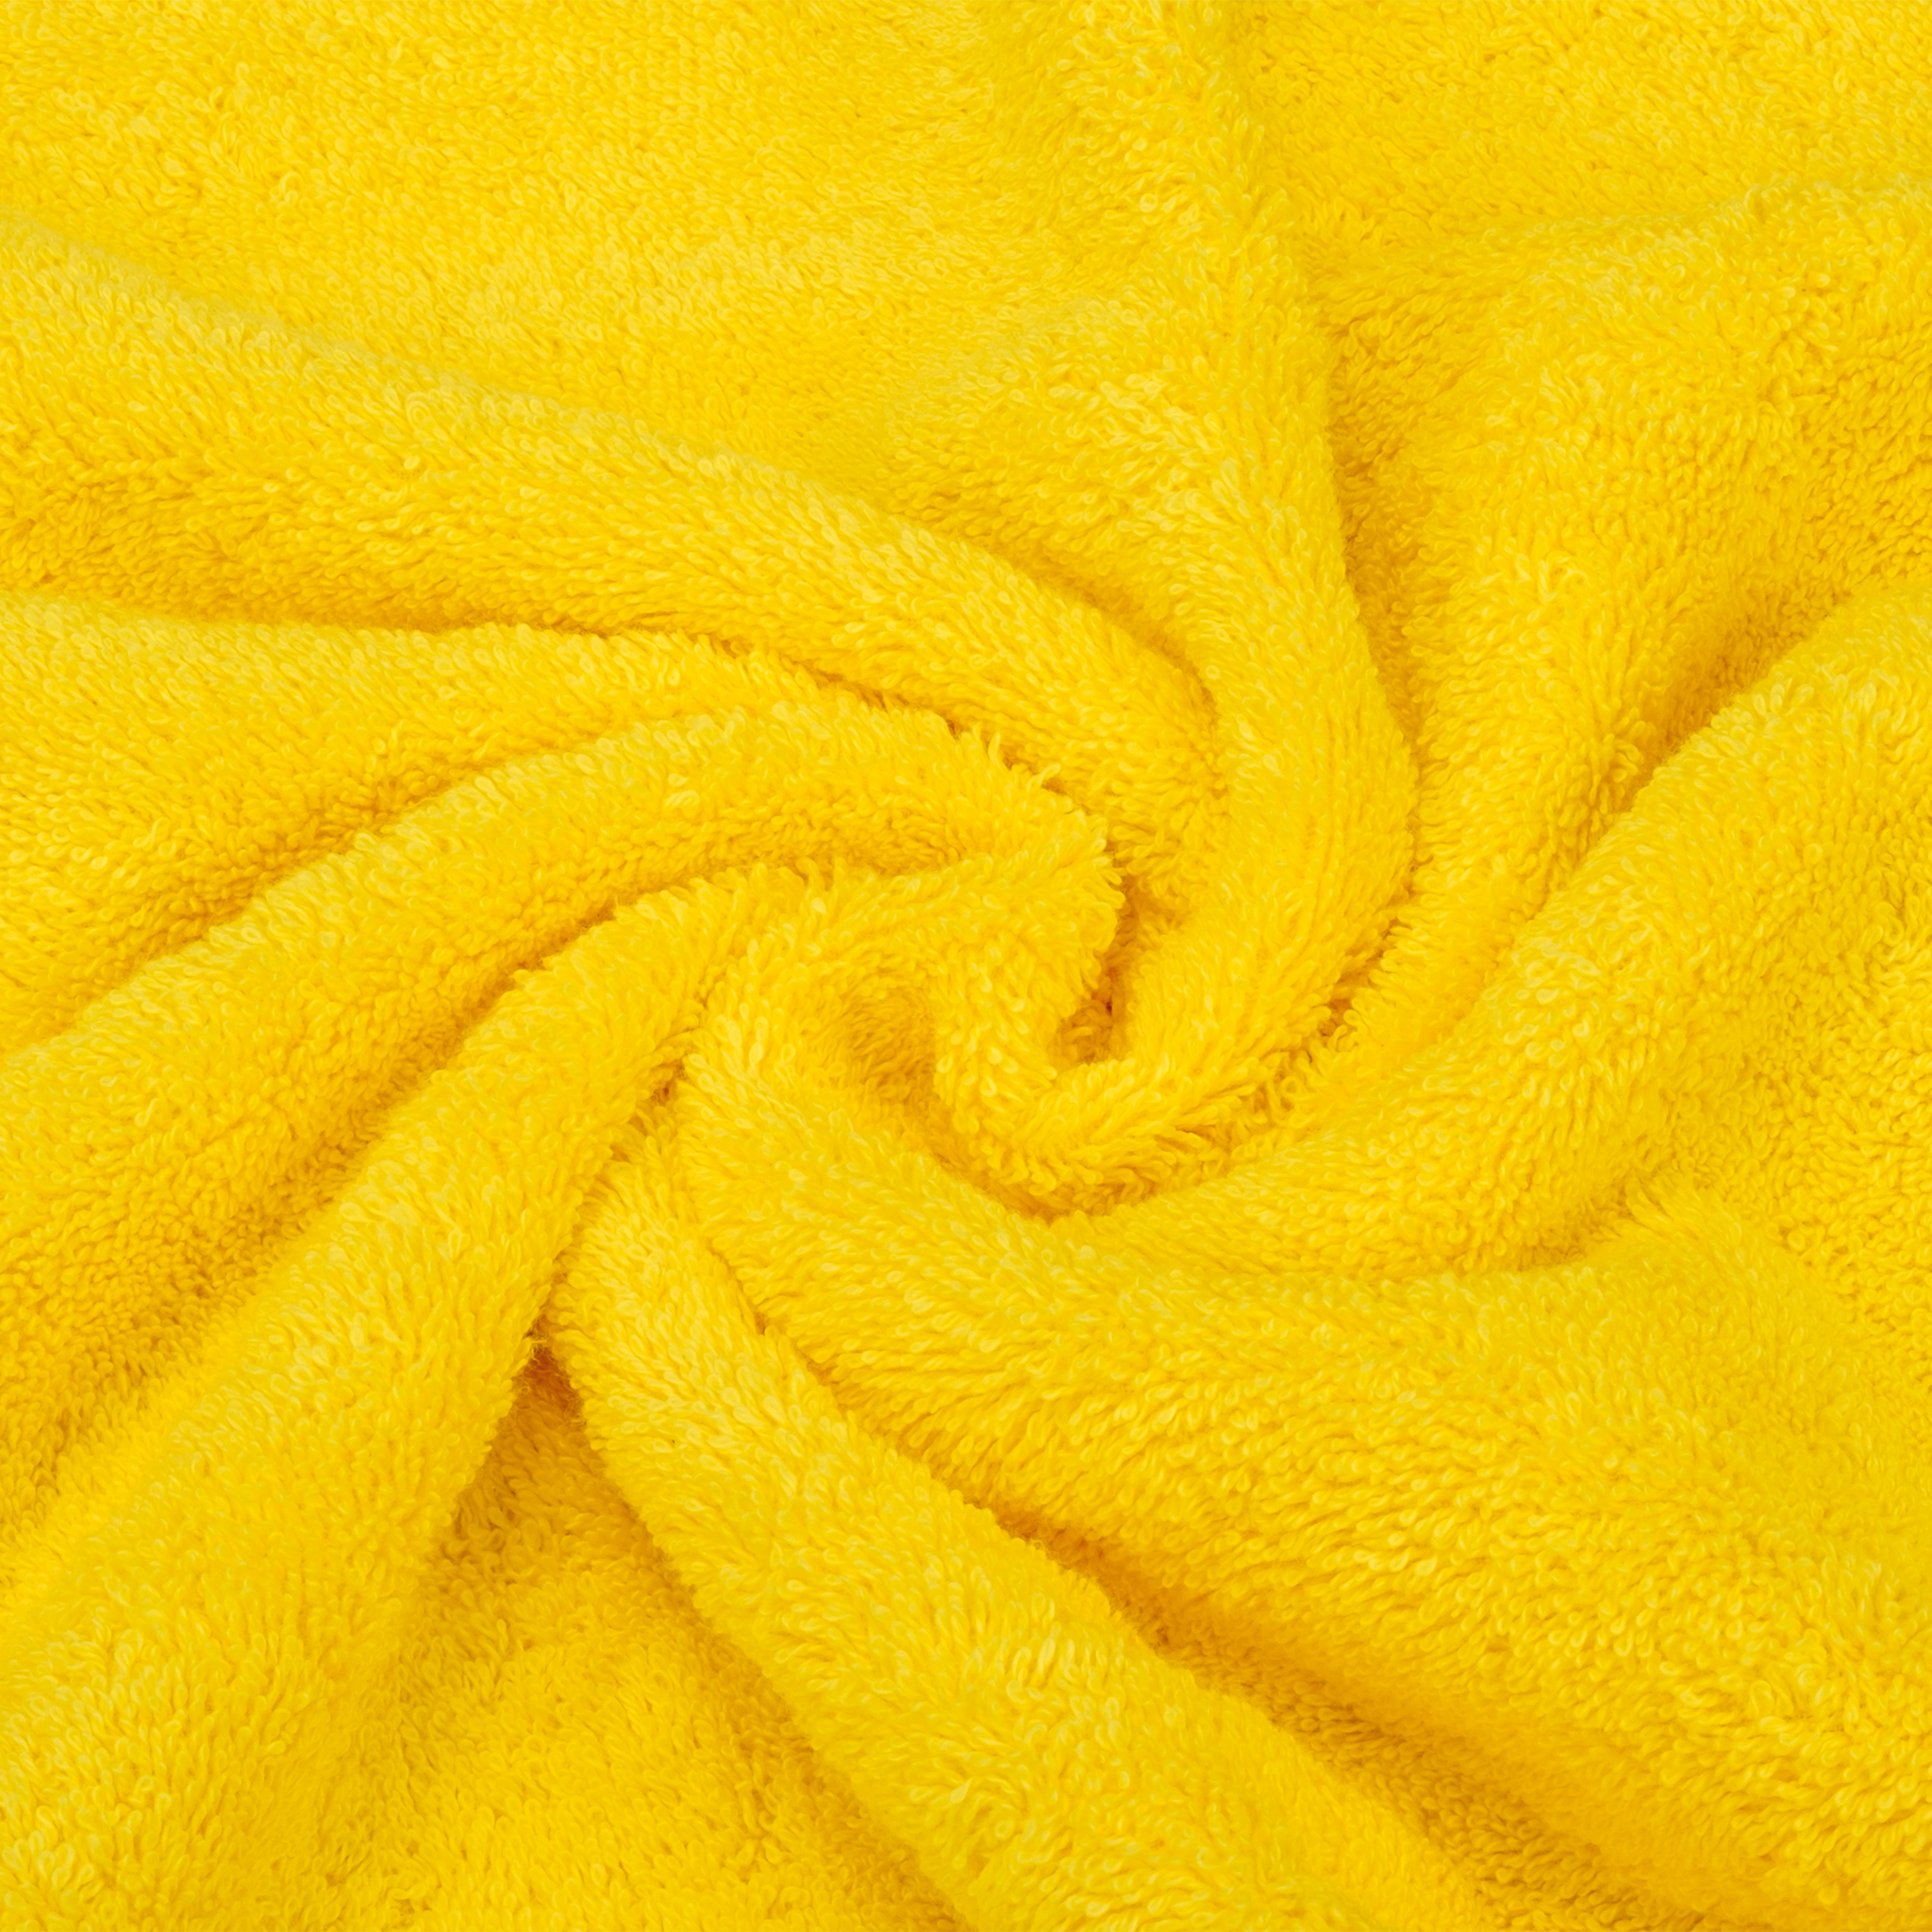 American Soft Linen - Single Piece Turkish Cotton Hand Towels - Yellow - 5